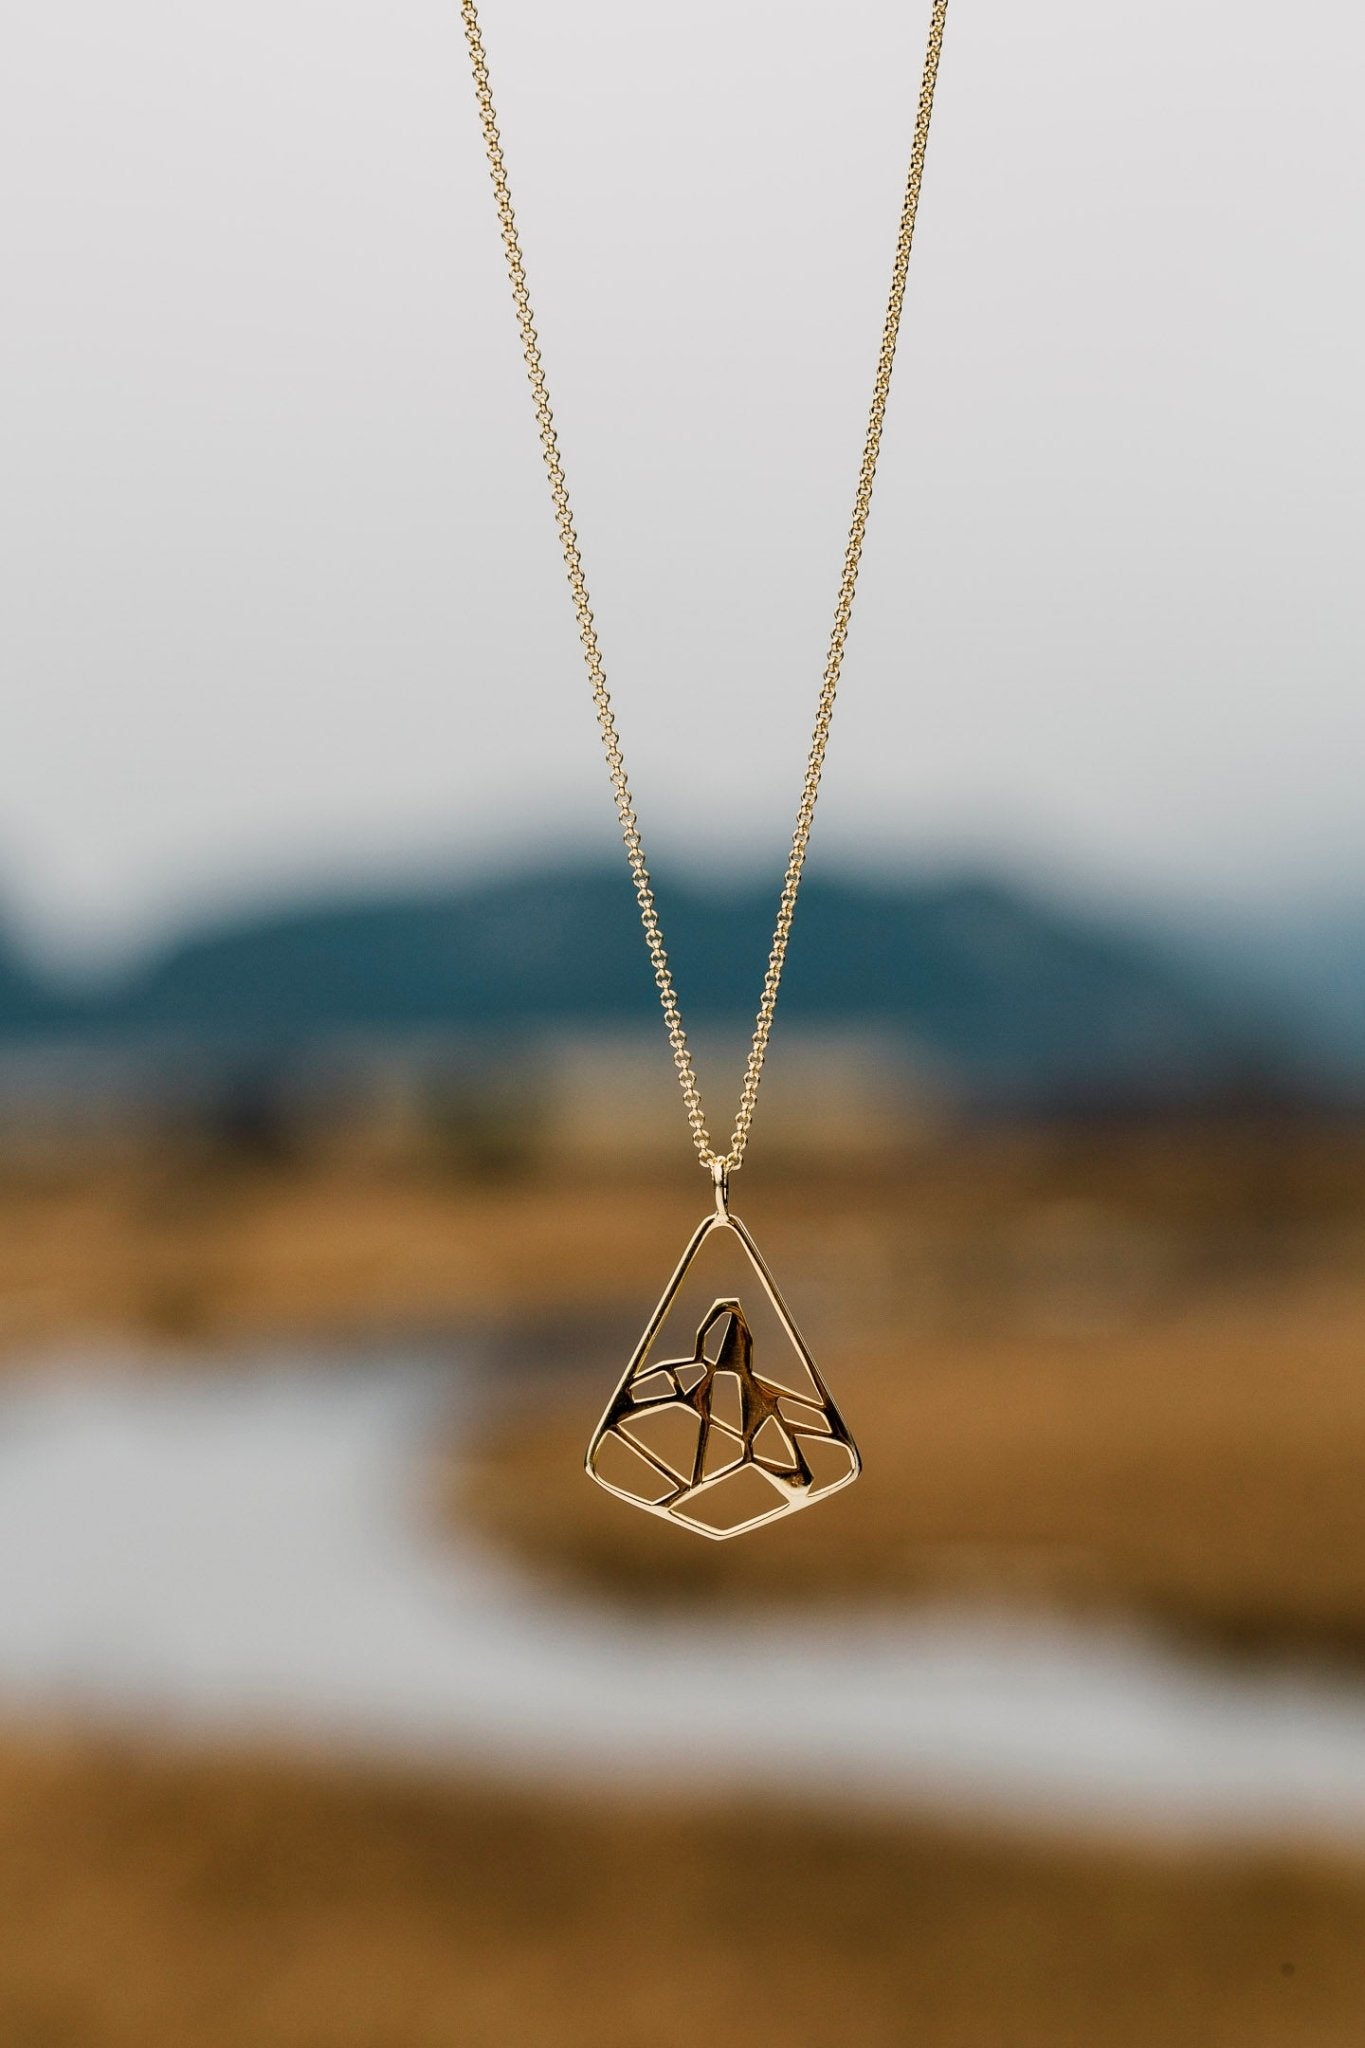 Gold Black Tusk pendant necklace  shown against blurred river background